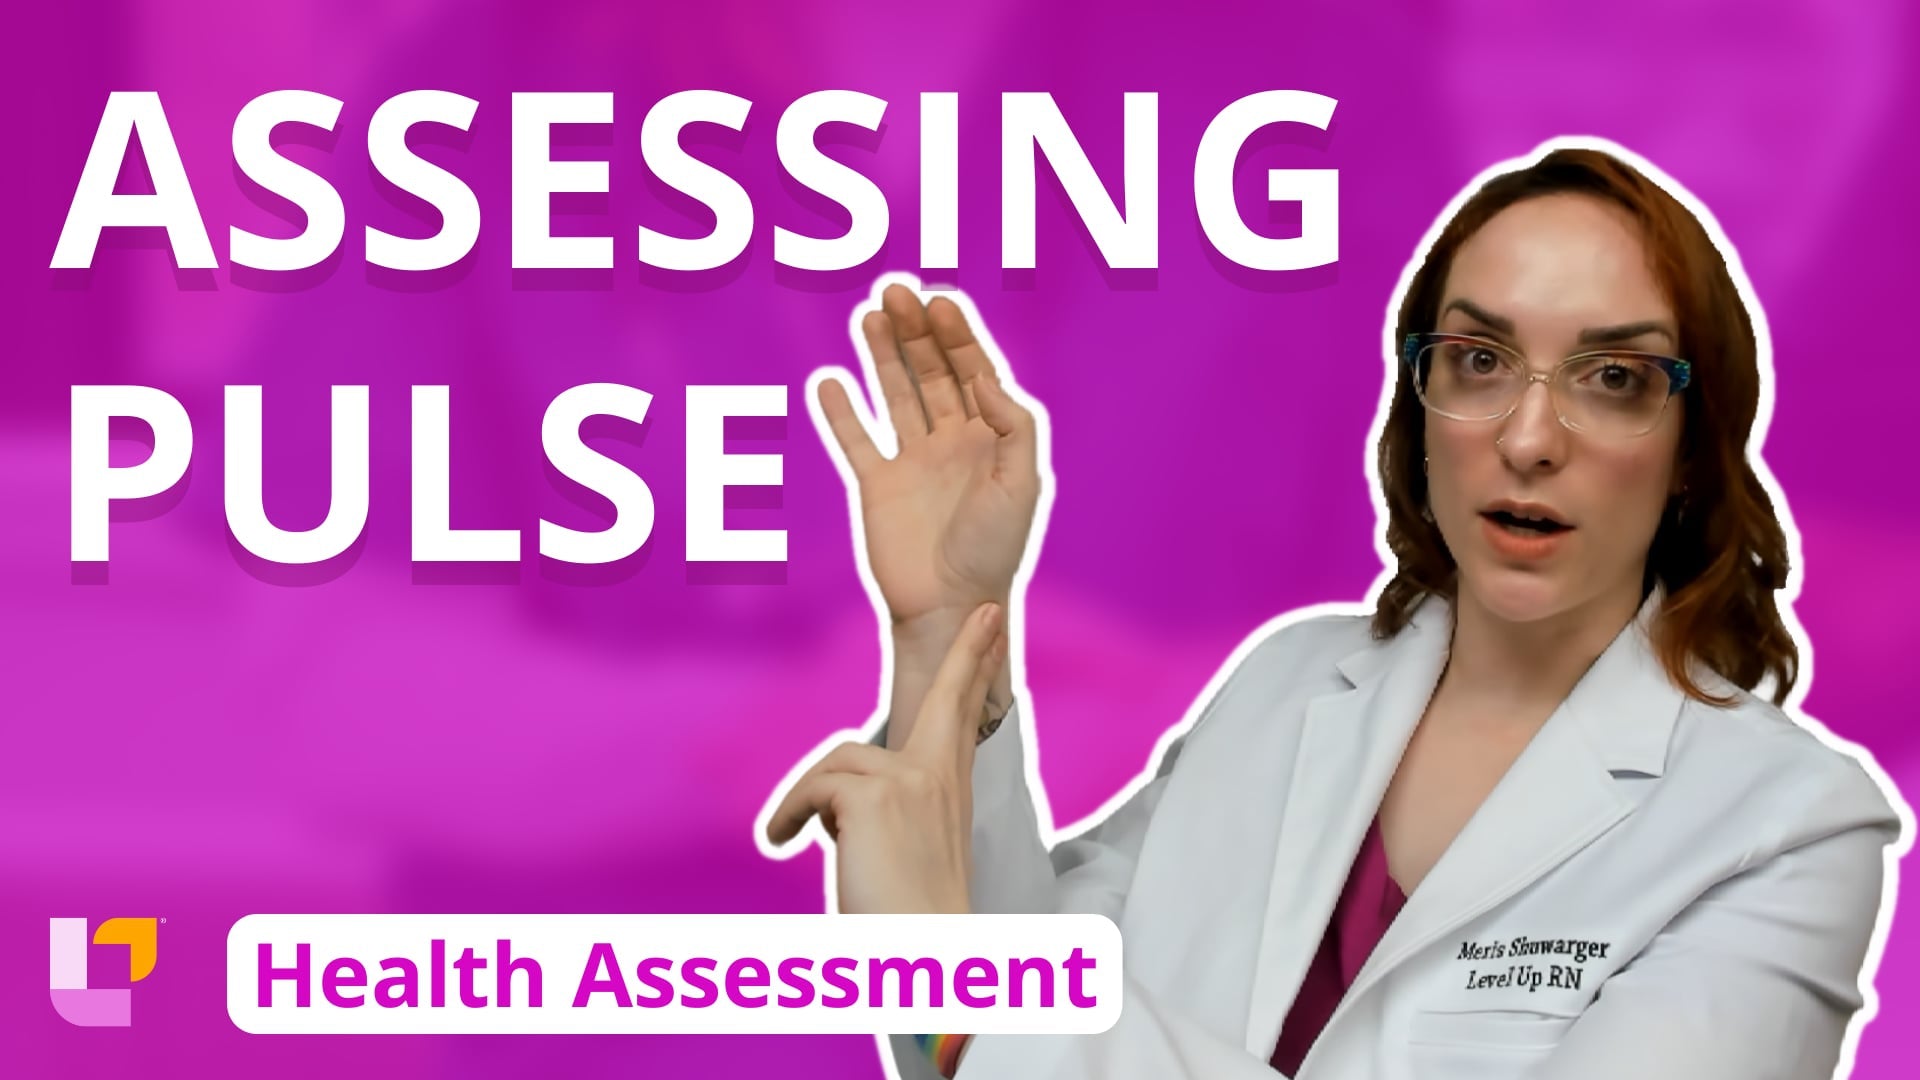 Health Assessment, part 5: Assessing Pulse - LevelUpRN